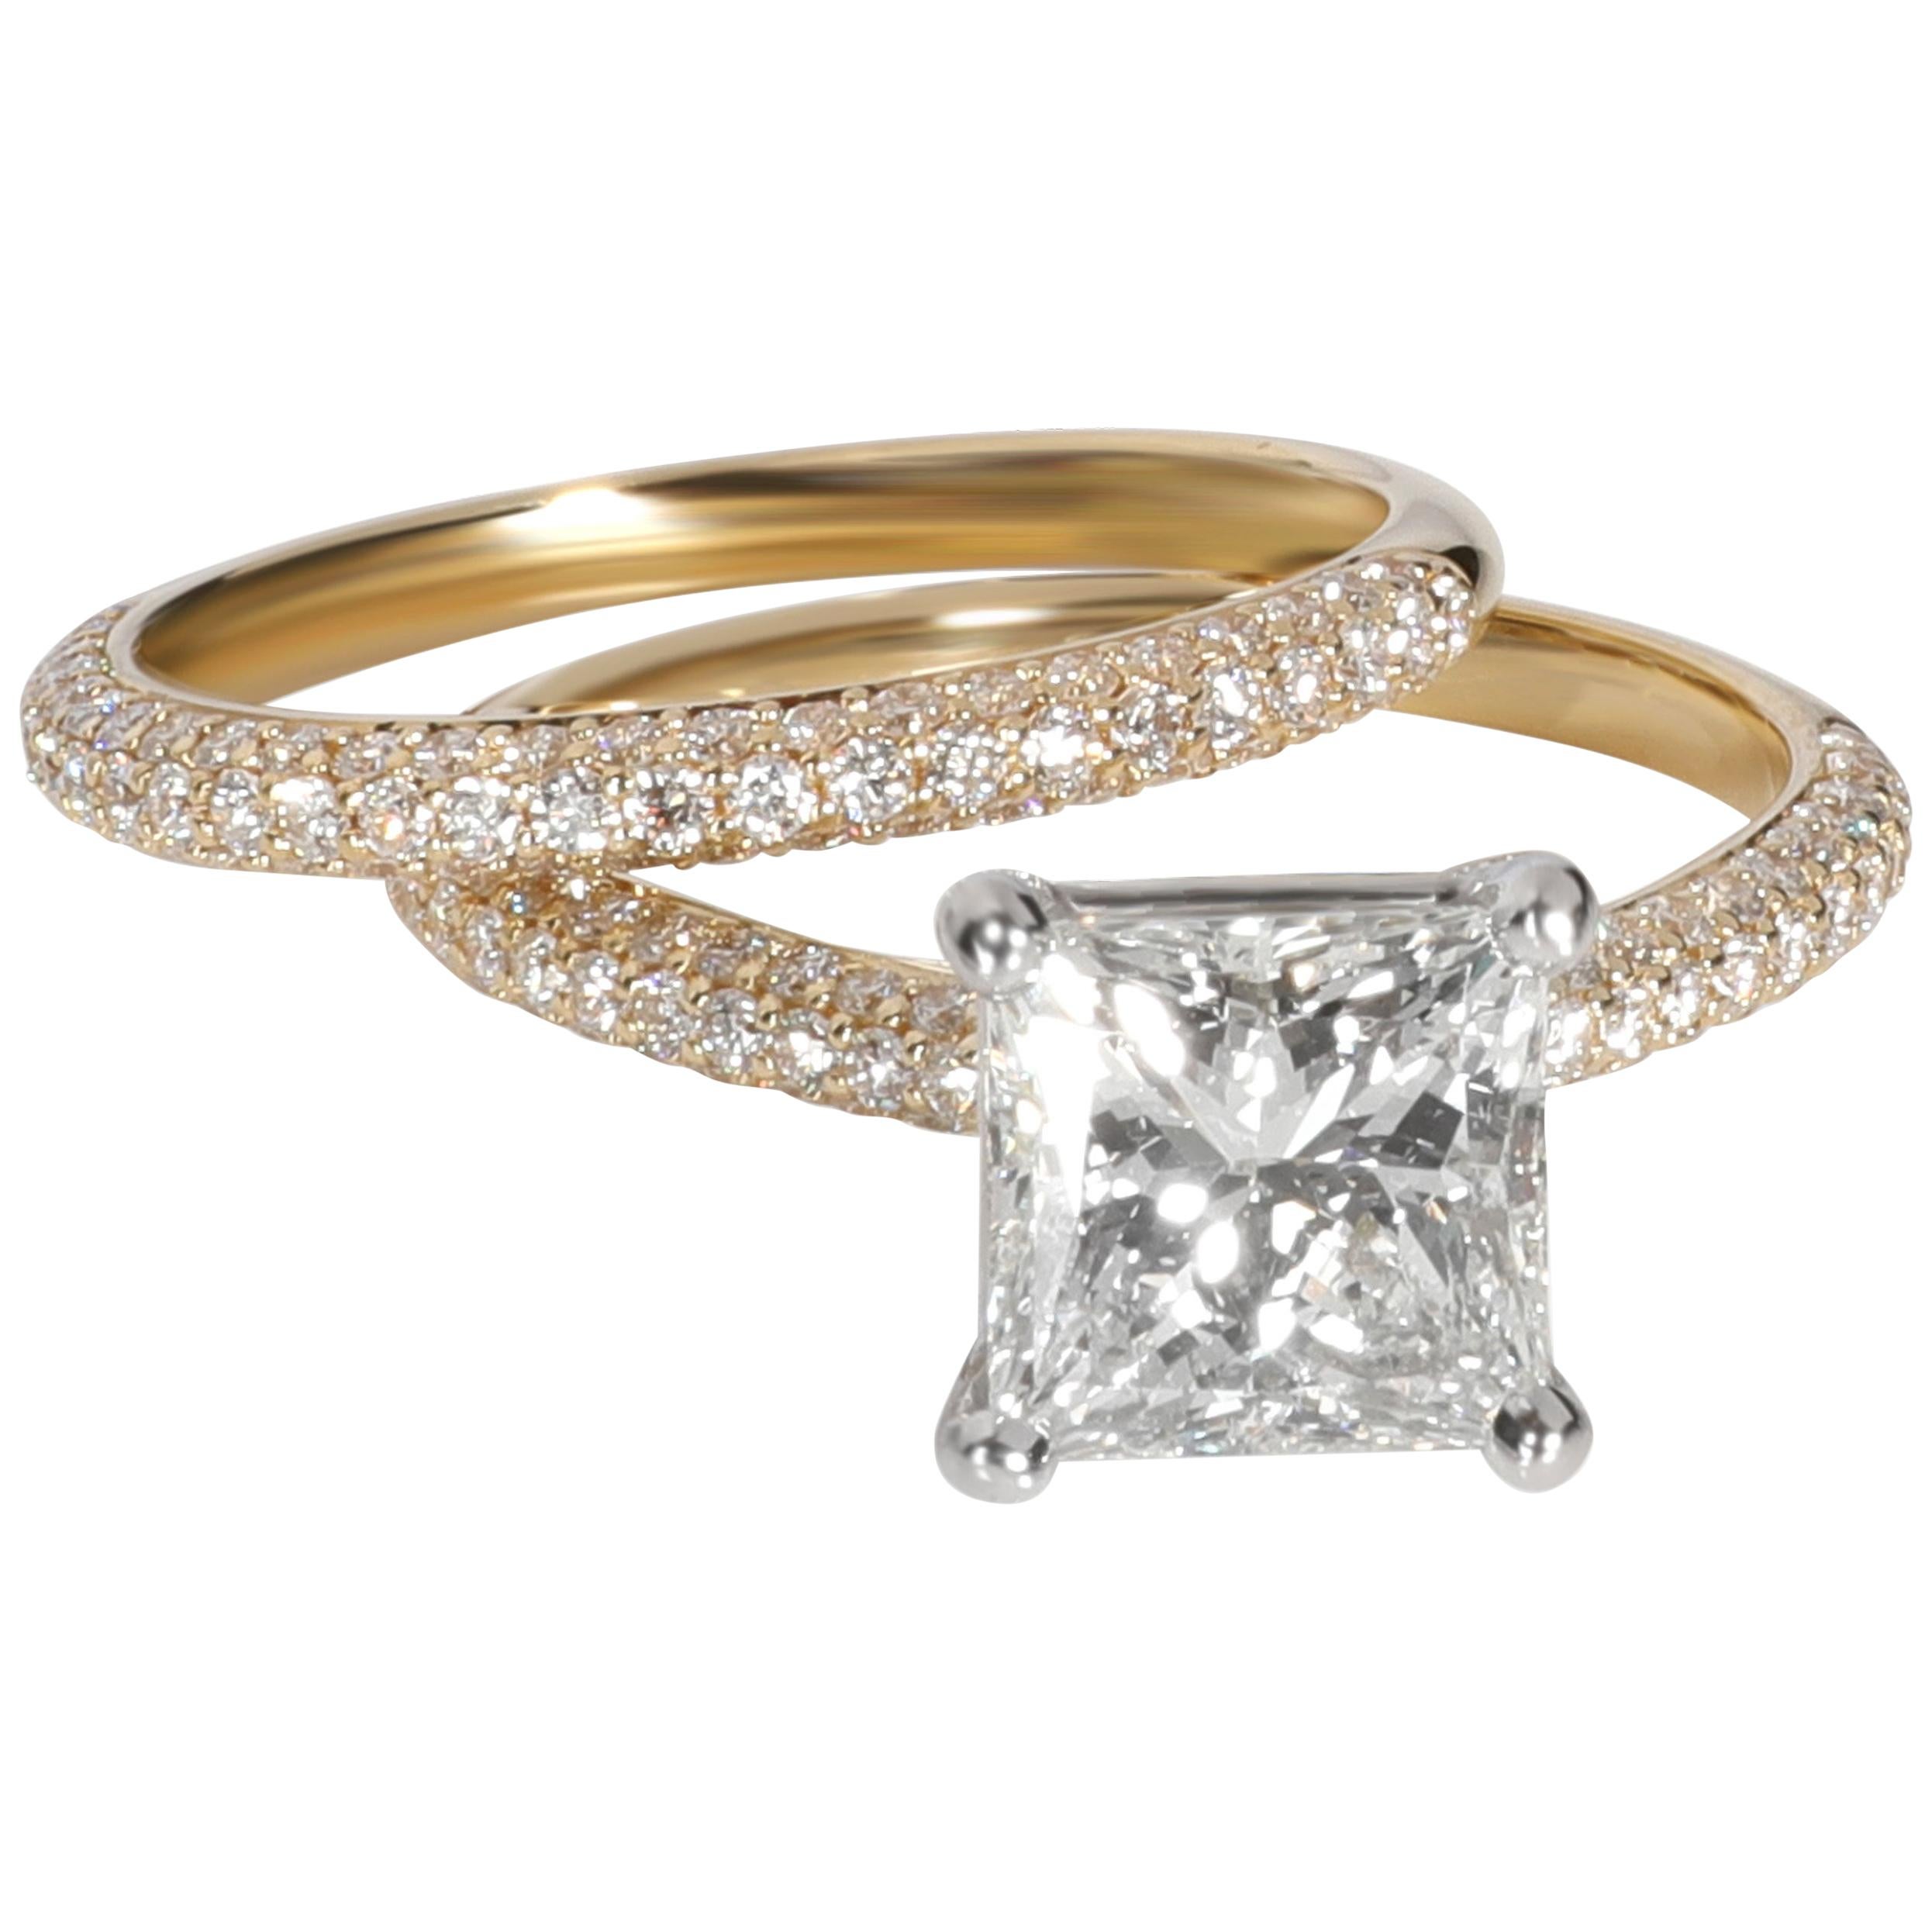 Blue Nile Princess Diamond Wedding Set in 18 Karat Yellow Gold H VVS2 2.70 Carat